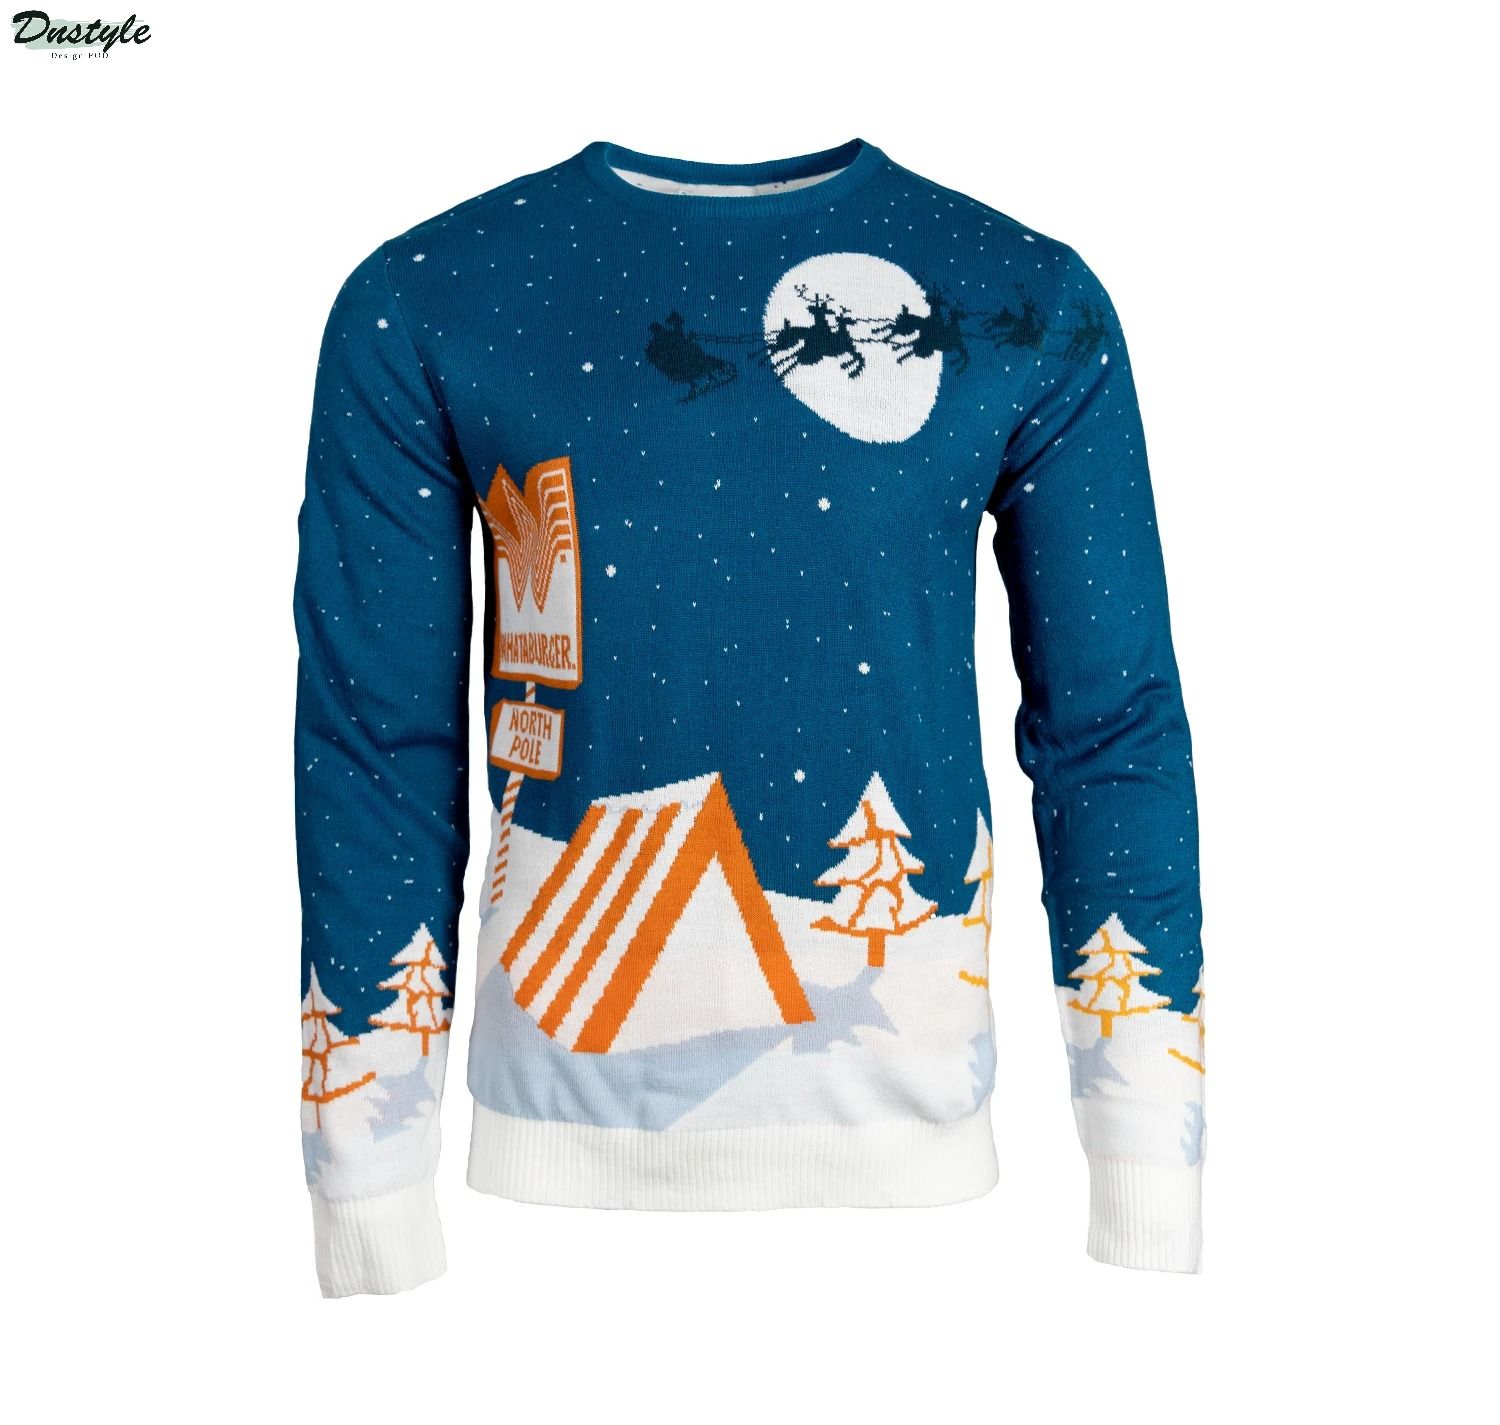 Whataburger north pole ugly christmas sweater